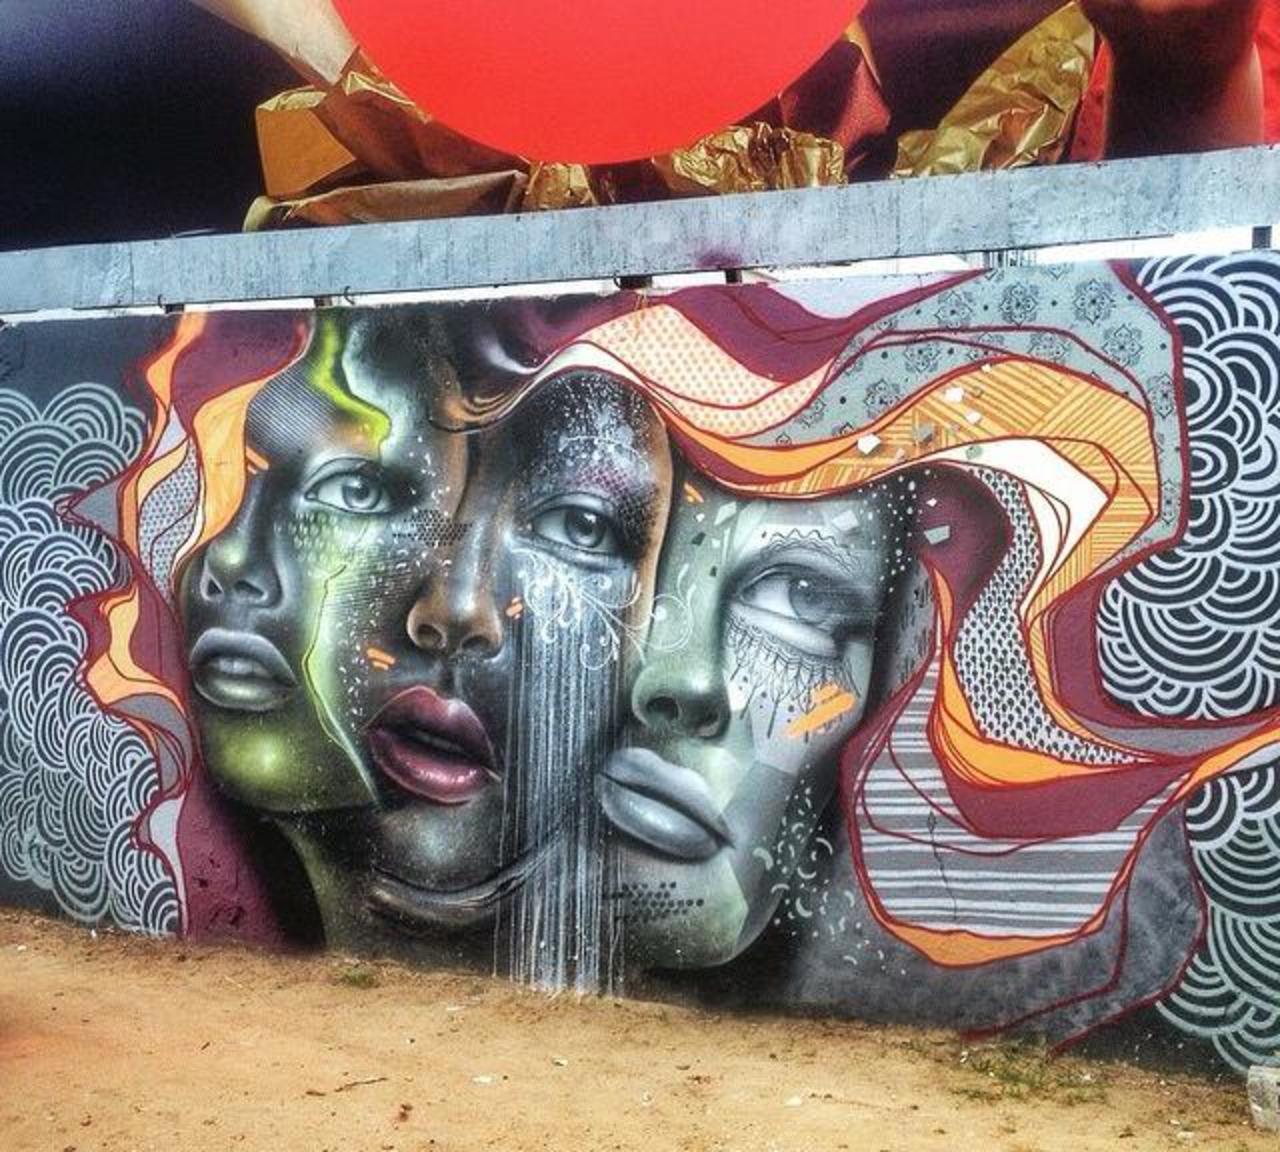 Amazing Street Art by AQI Luciano in Maceió, Brazil 

#art #arte #graffiti #streetart http://t.co/zNzfzQ5kaA